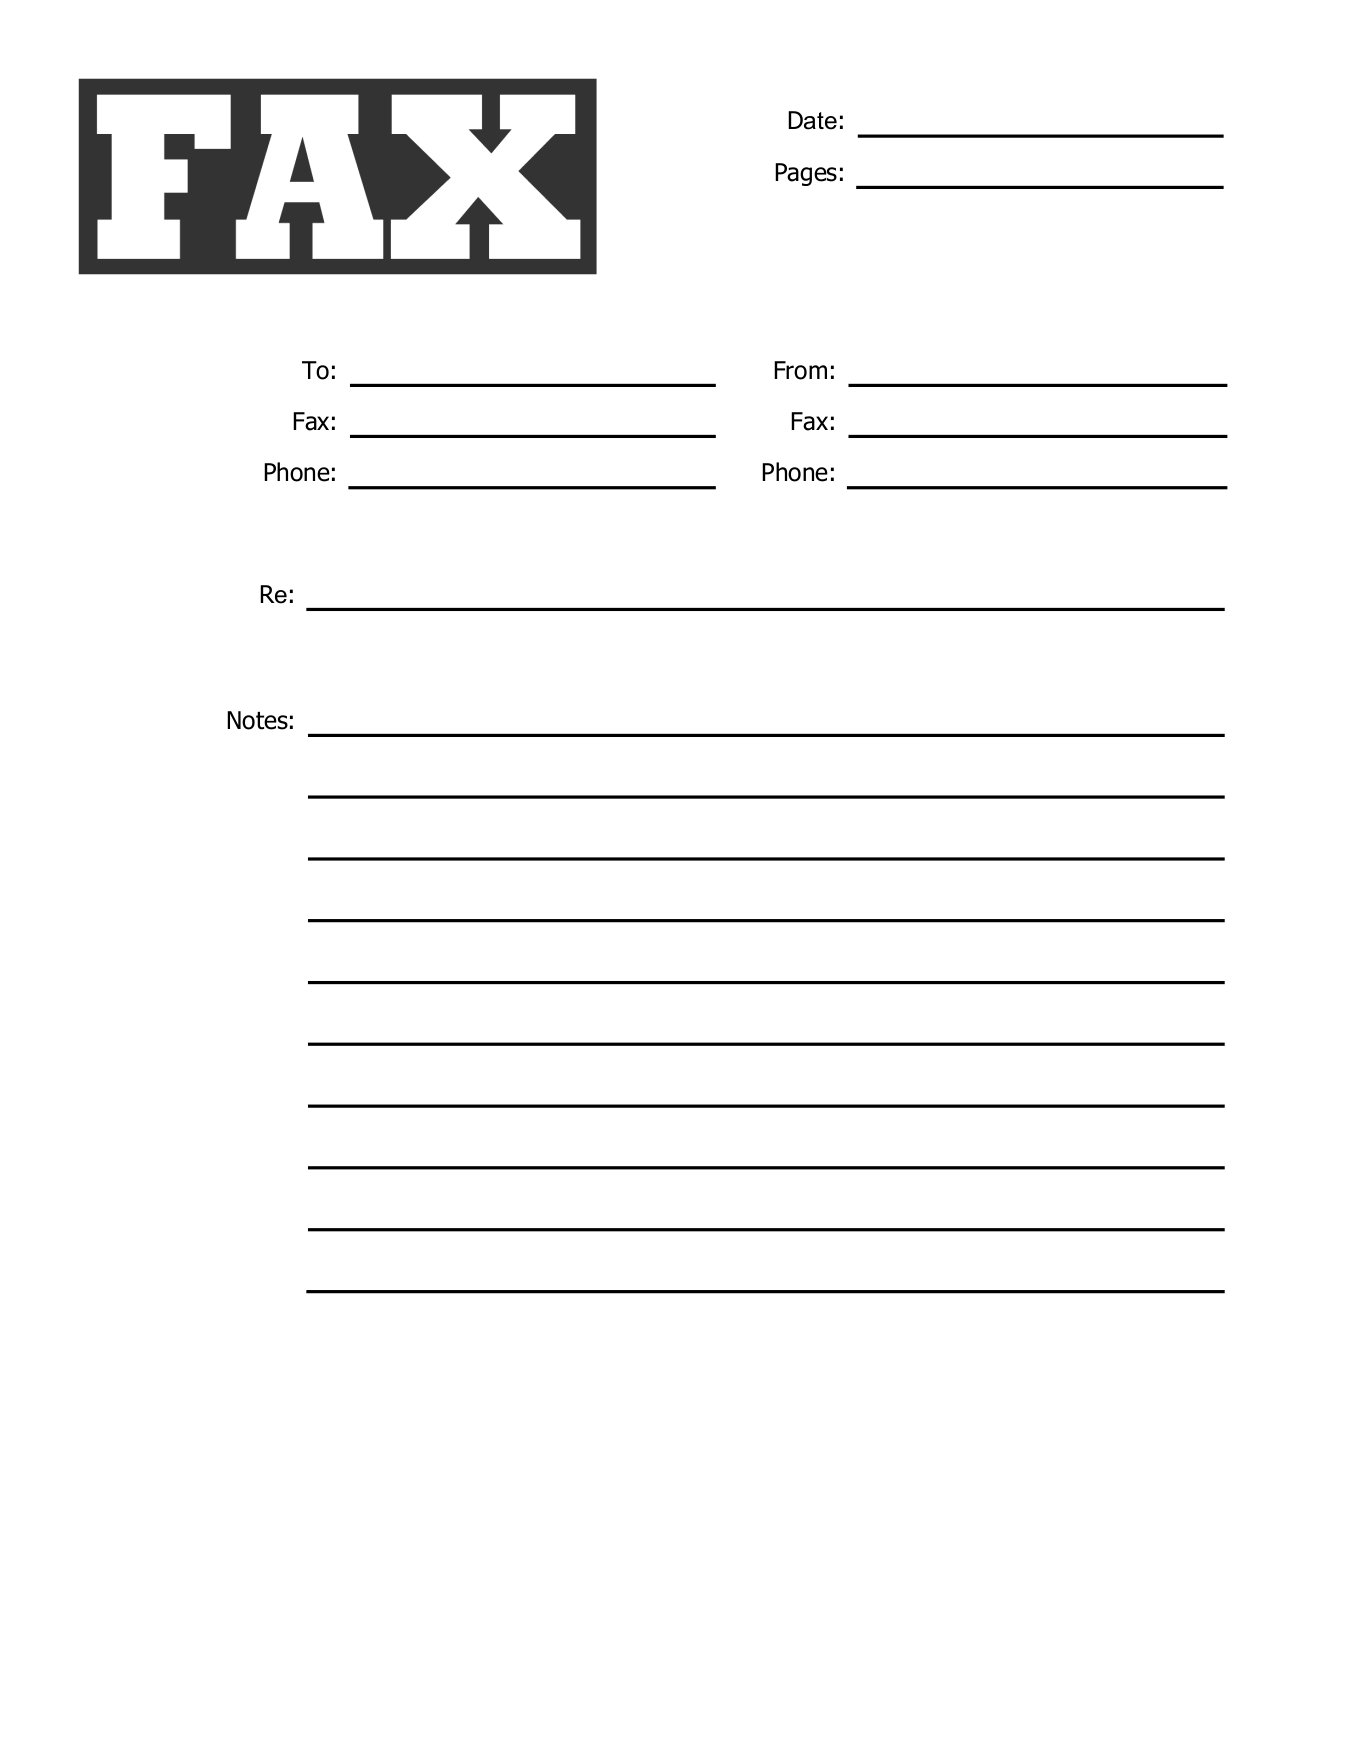 Fillable Online KINEX, Level 2 United Square, Level 1  - upopp.com.sg  Fax Email Print - pdfFiller